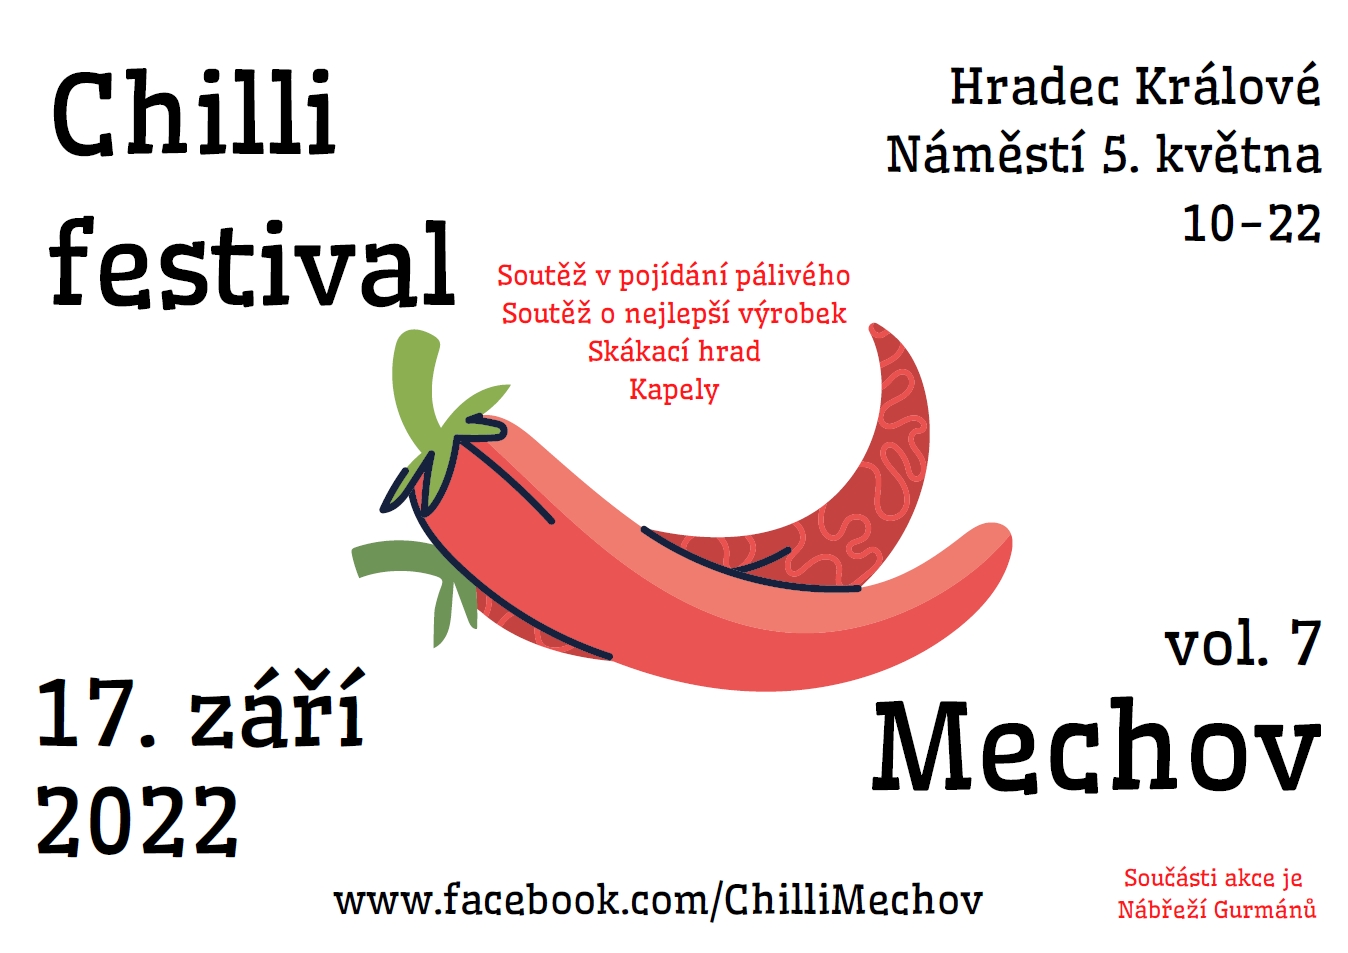 Chilli festival Mechov vol. 7